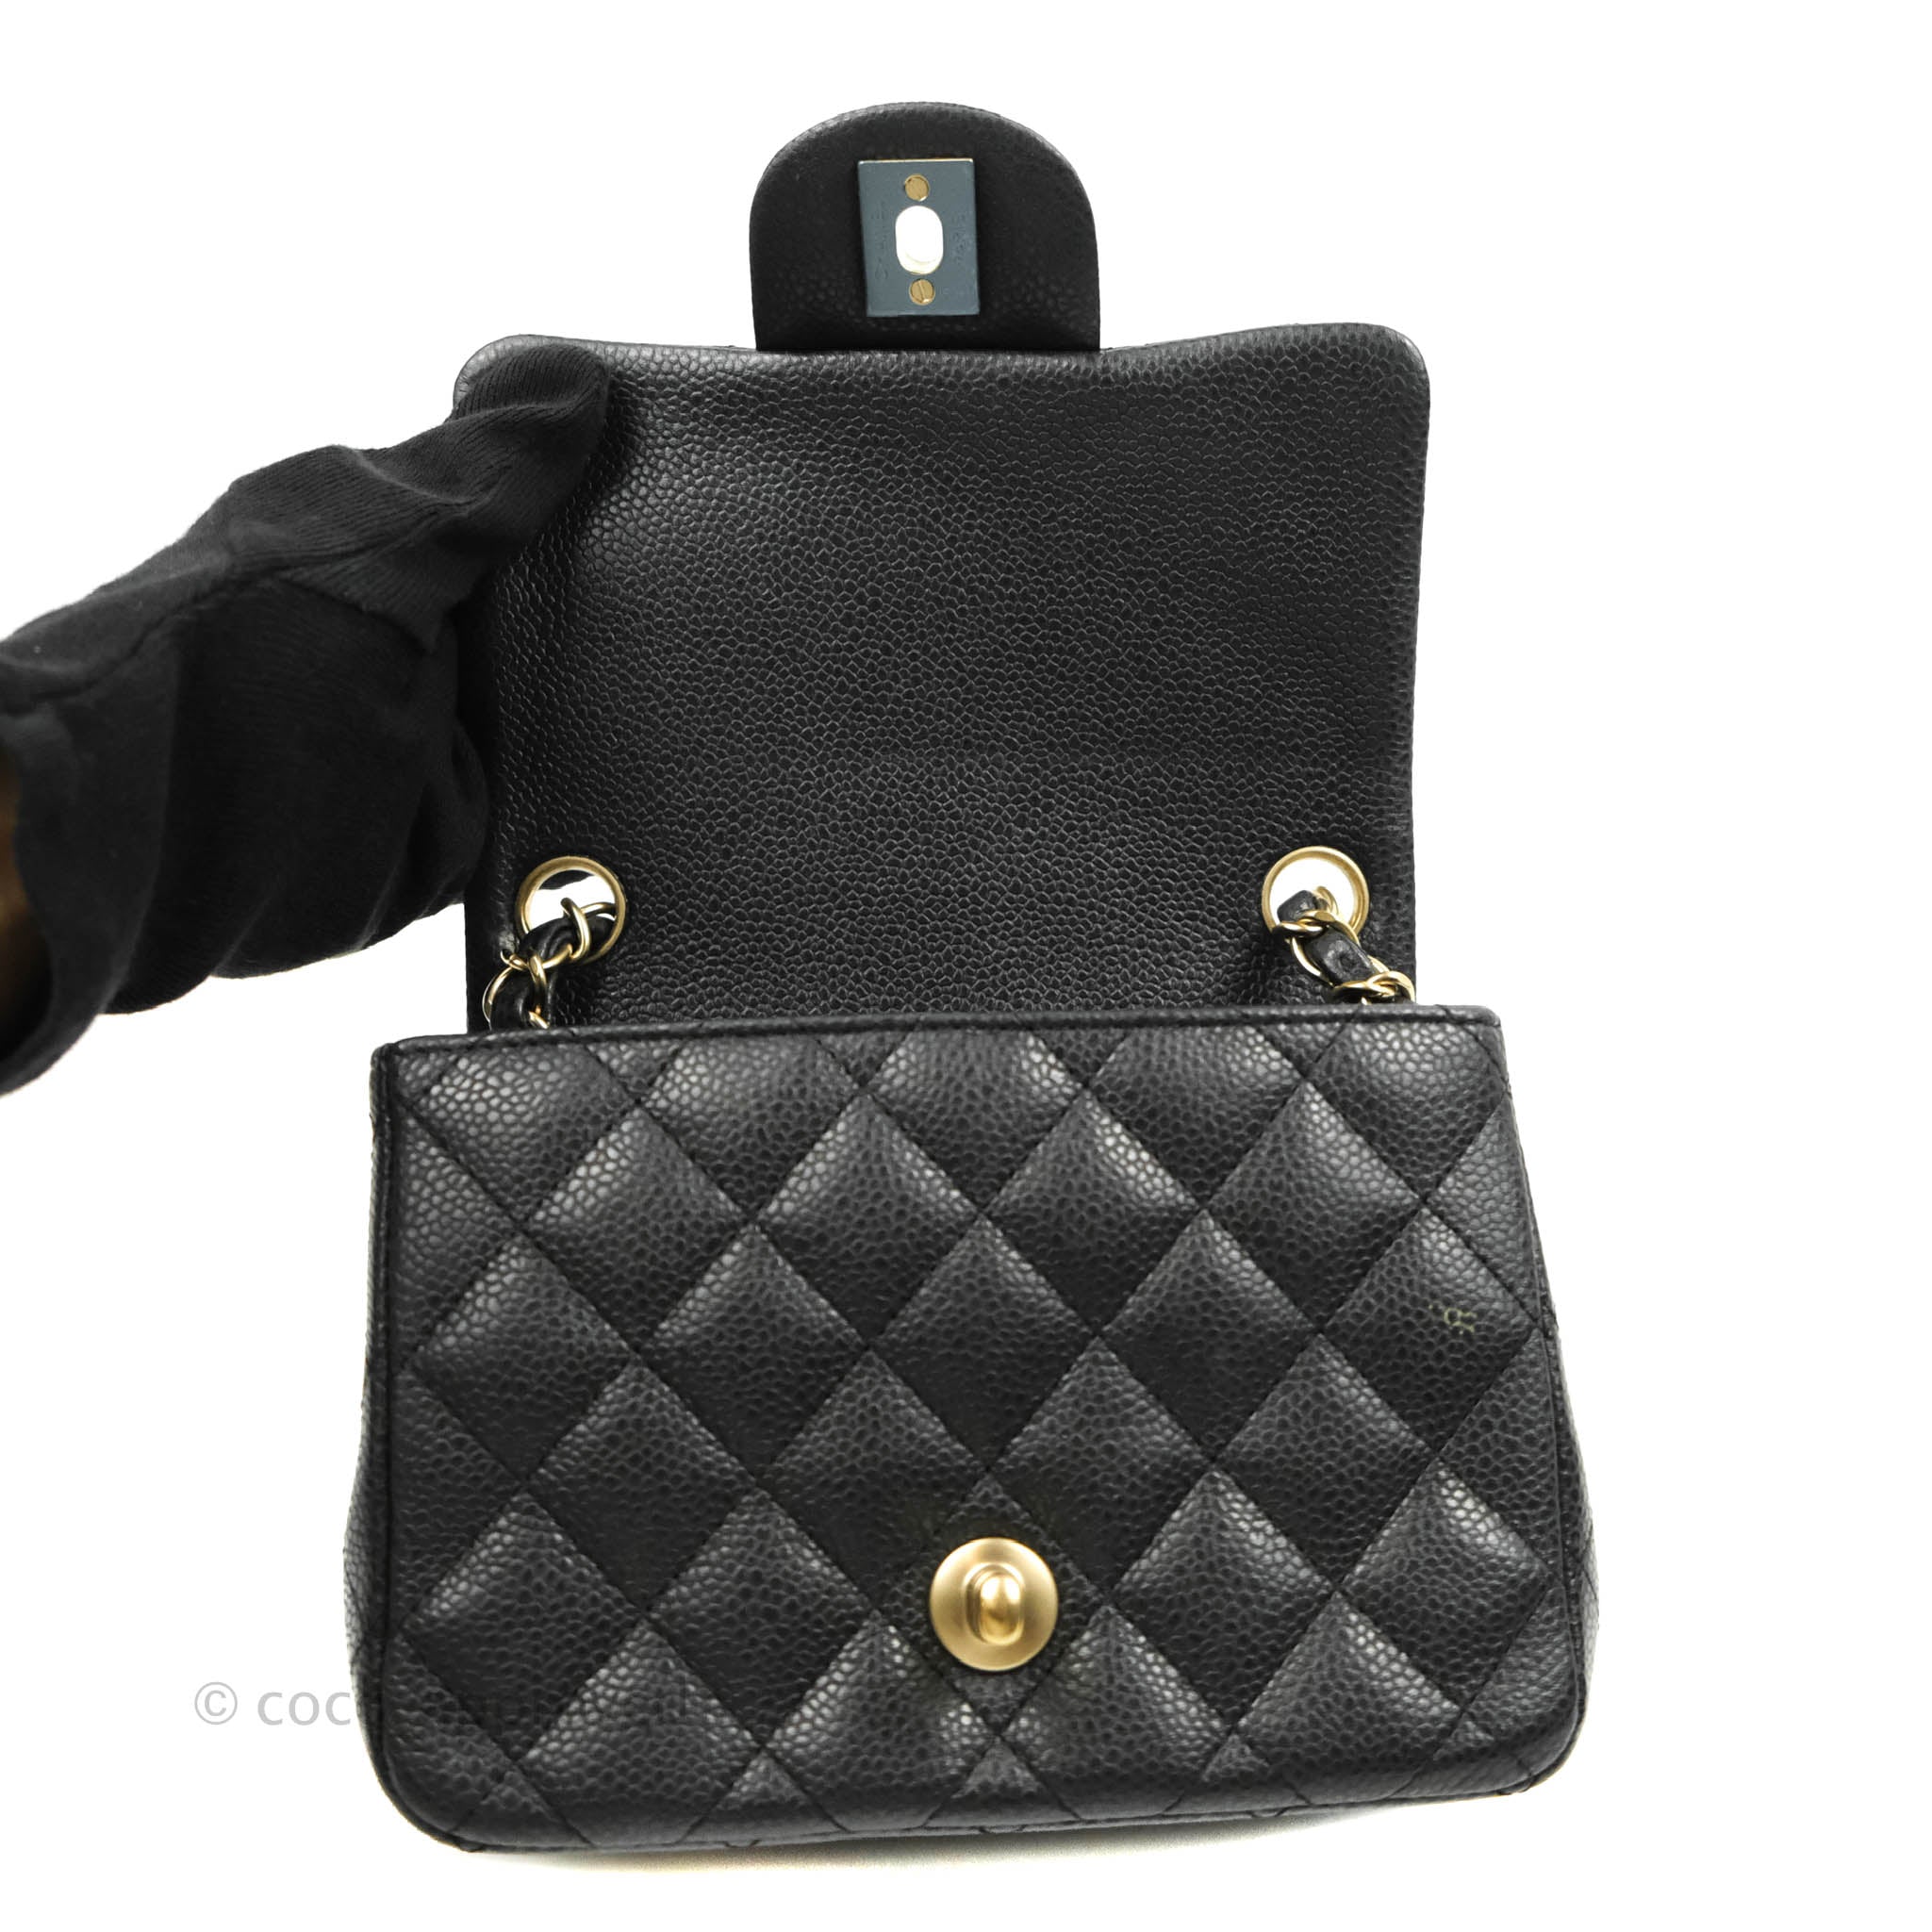 Chanel Quilted Mini Square Iridescent Black Caviar Matte Gold Hardware –  Coco Approved Studio